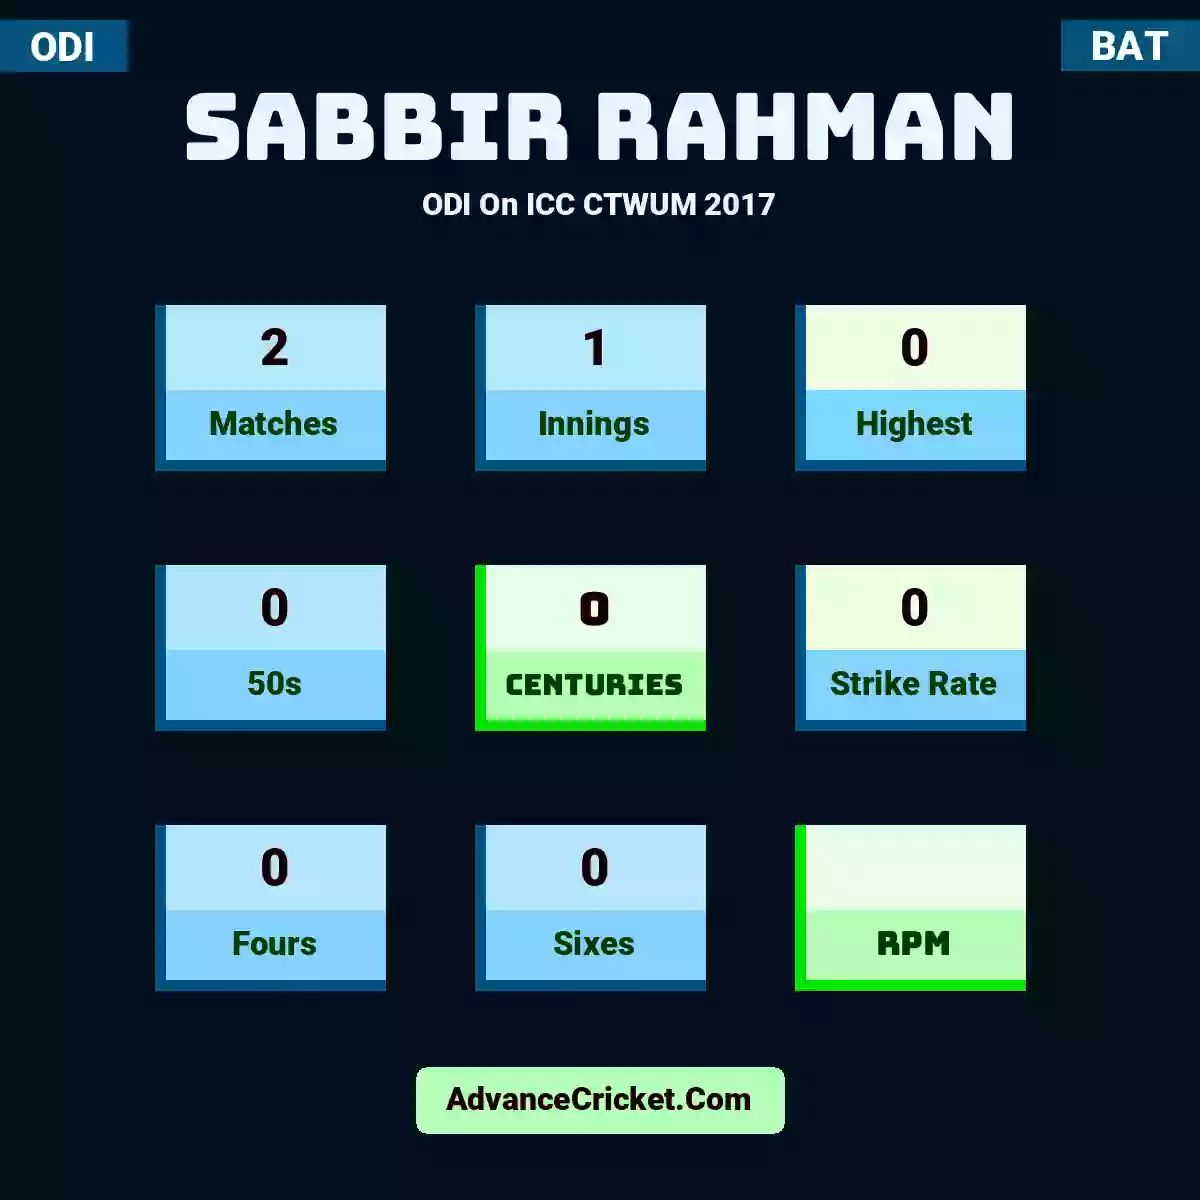 Sabbir Rahman ODI  On ICC CTWUM 2017, Sabbir Rahman played 2 matches, scored 0 runs as highest, 0 half-centuries, and 0 centuries, with a strike rate of 0. S.Rahman hit 0 fours and 0 sixes.